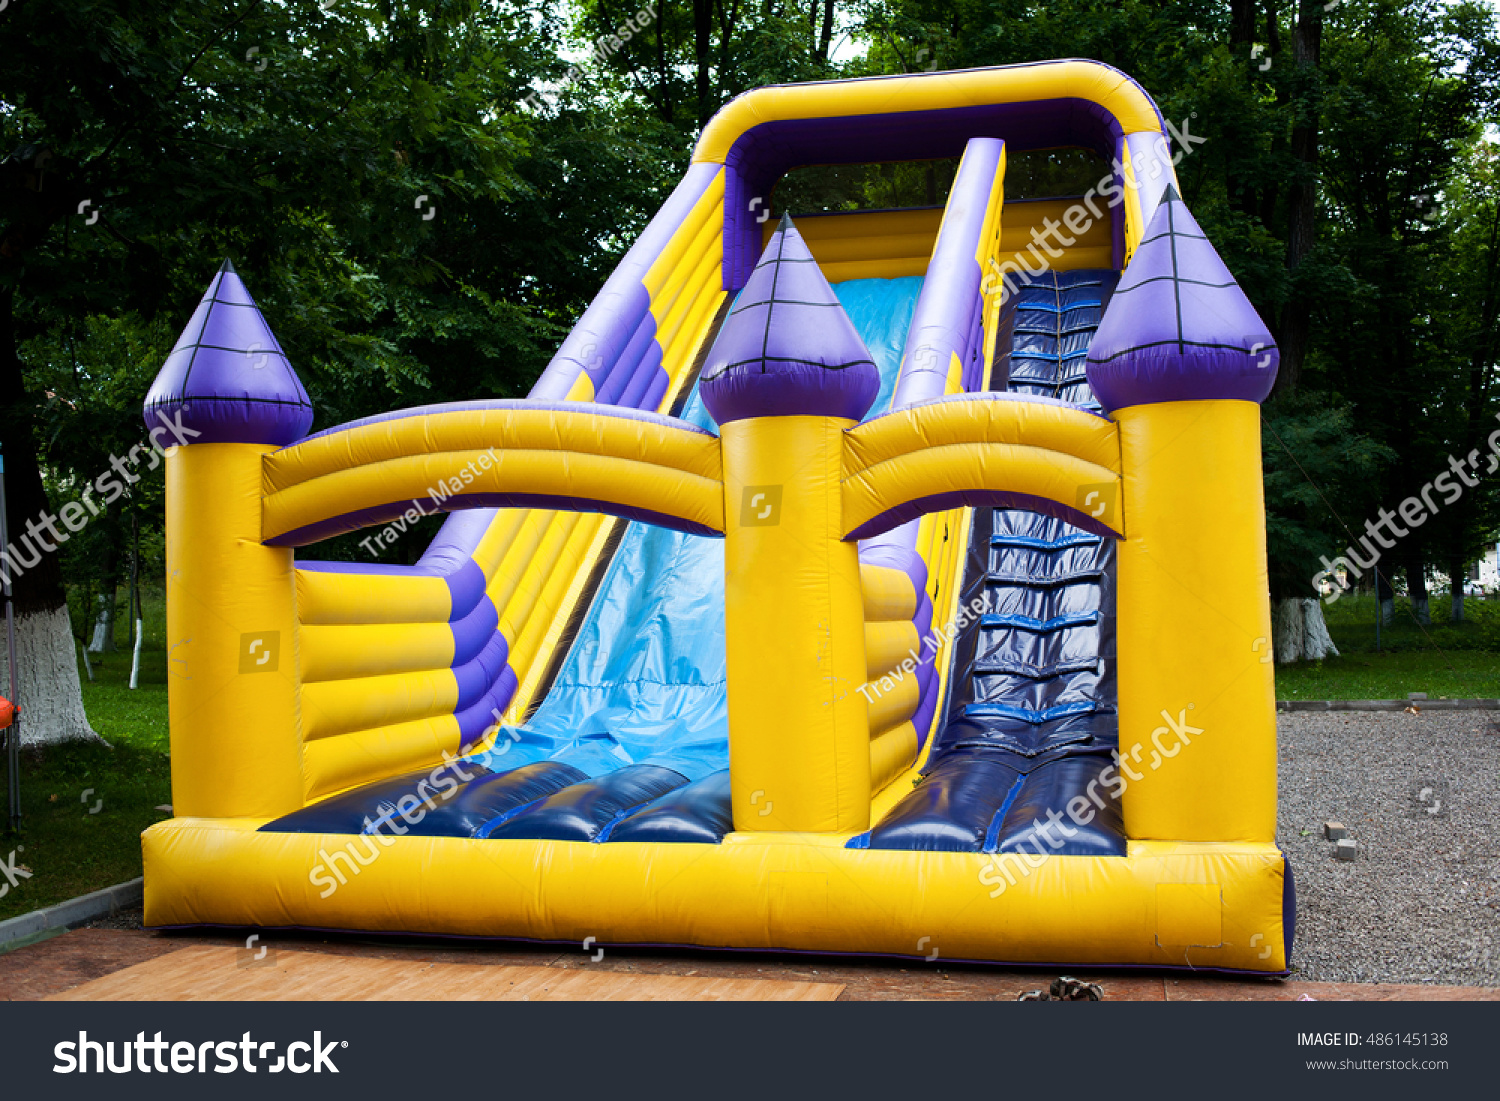 Inflatable big bouncy castle slide in a park #486145138